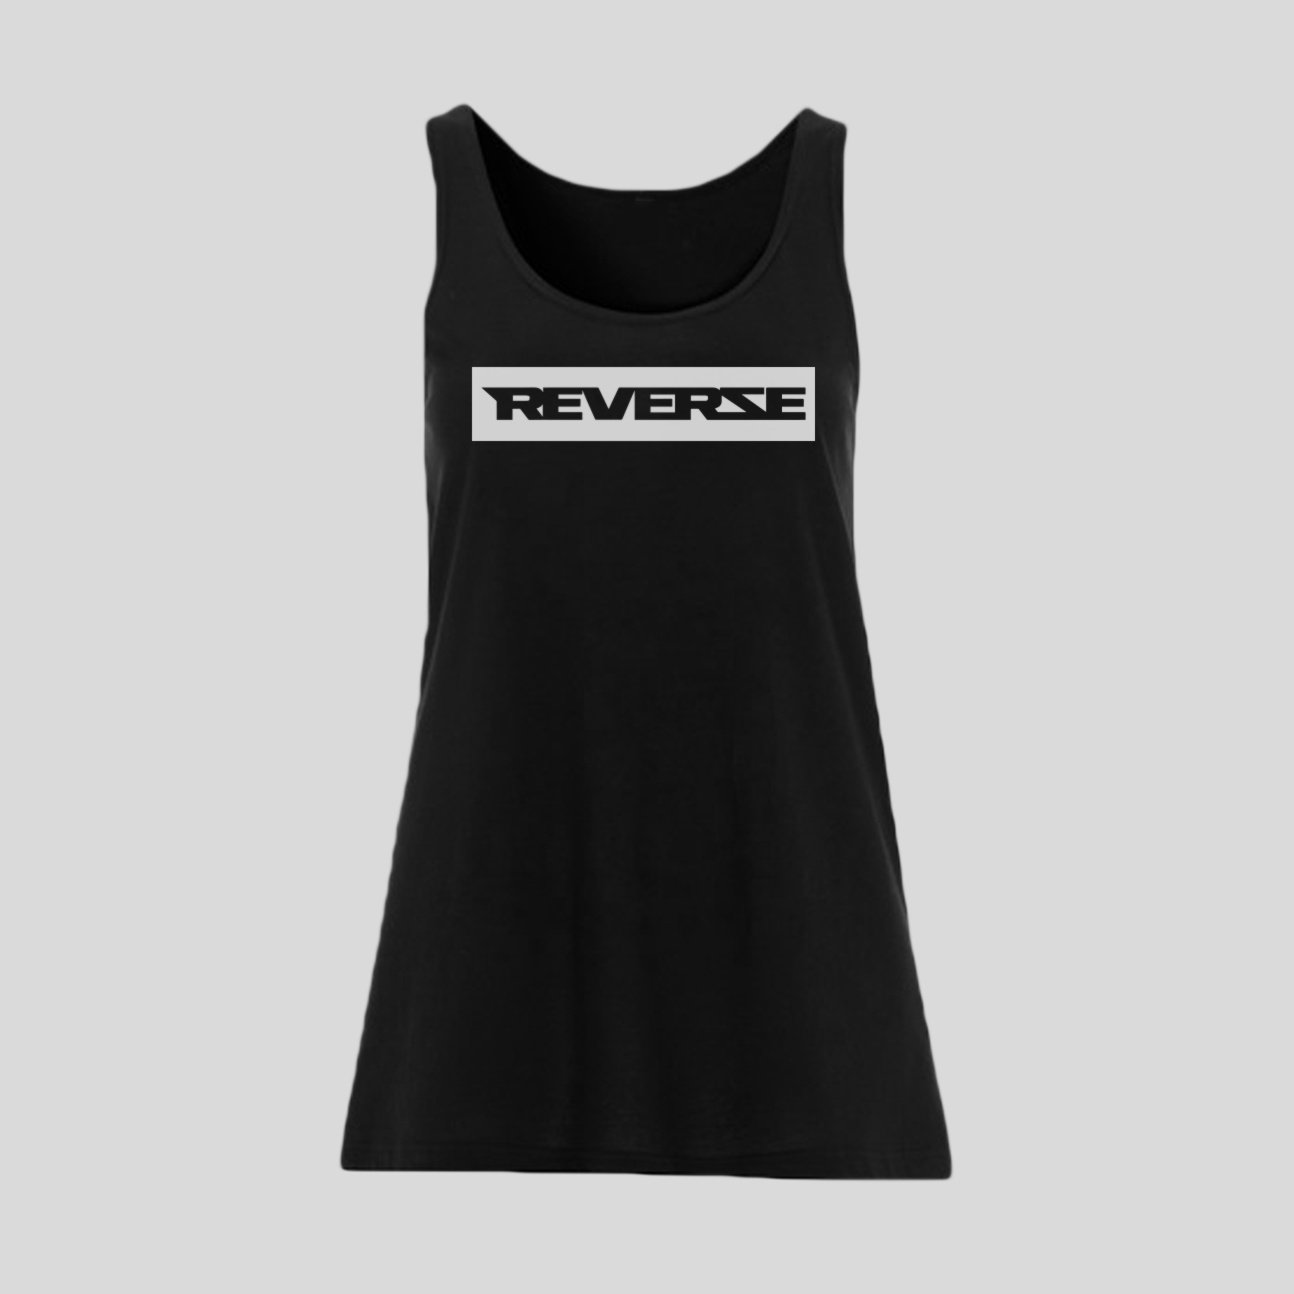 Reverze - Official Women's Tanktop